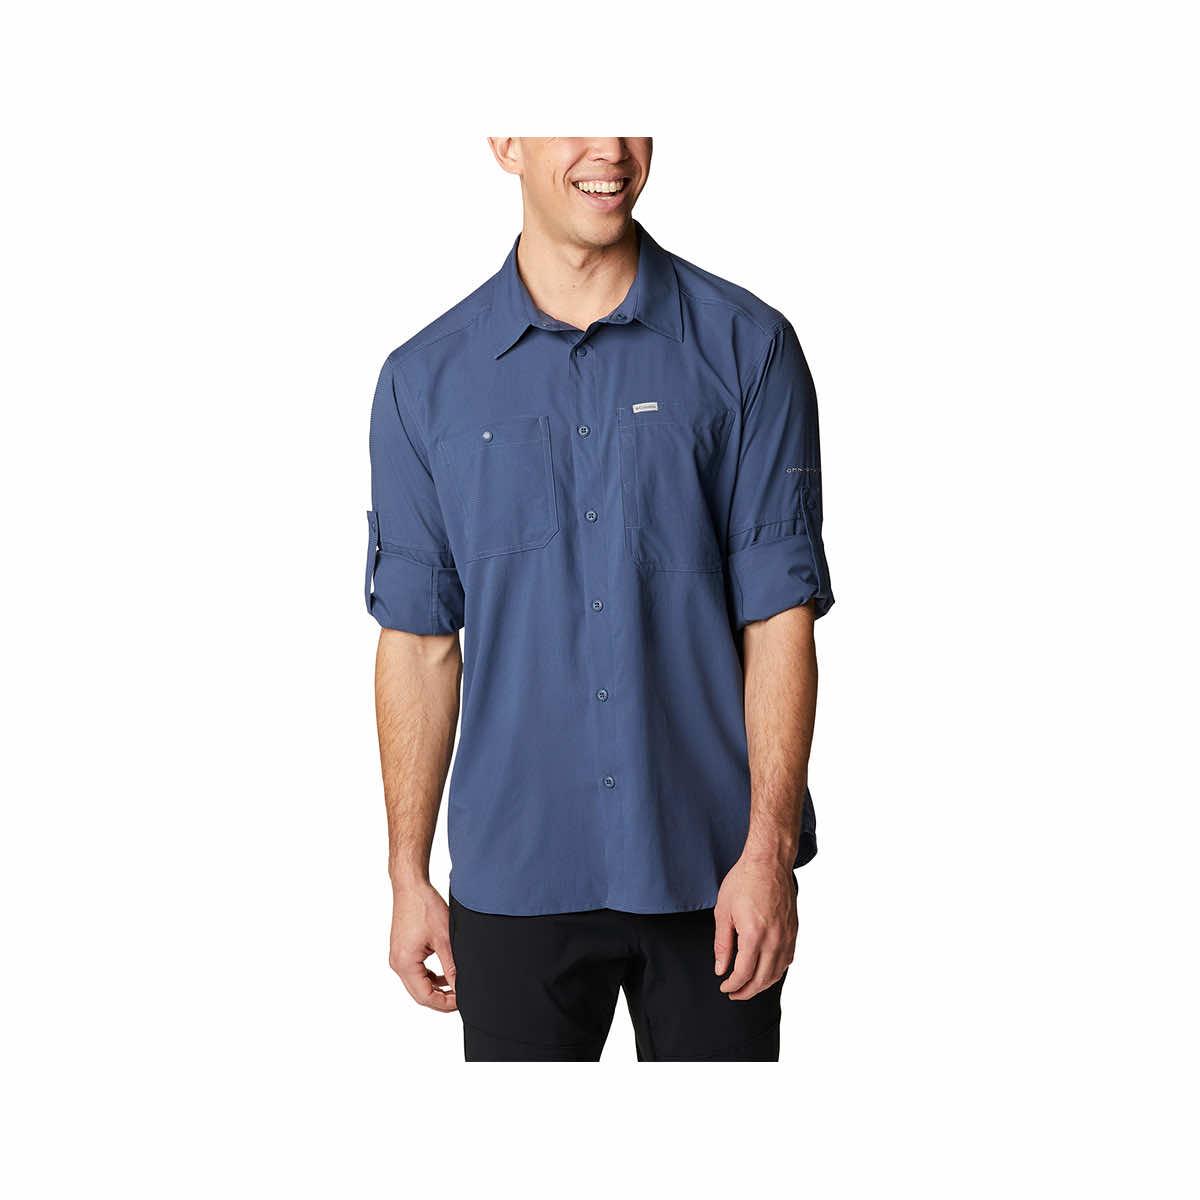 Columbia Silver Ridge Utility Lite Long Sleeve Shirt (XL, Grey)